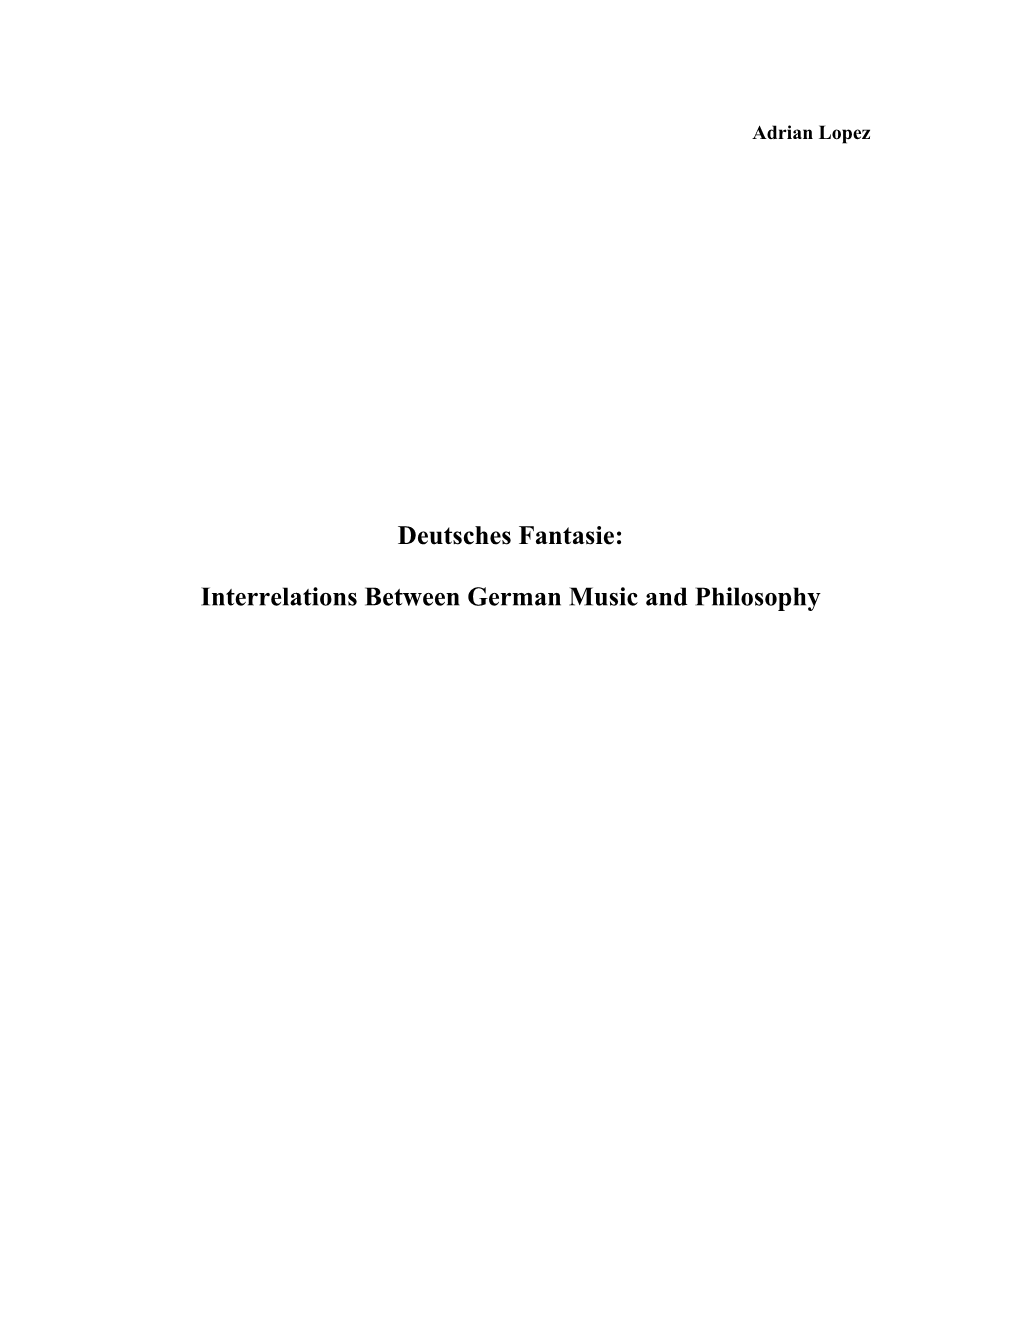 Deutsches Fantasie: Interrelations Between German Music And